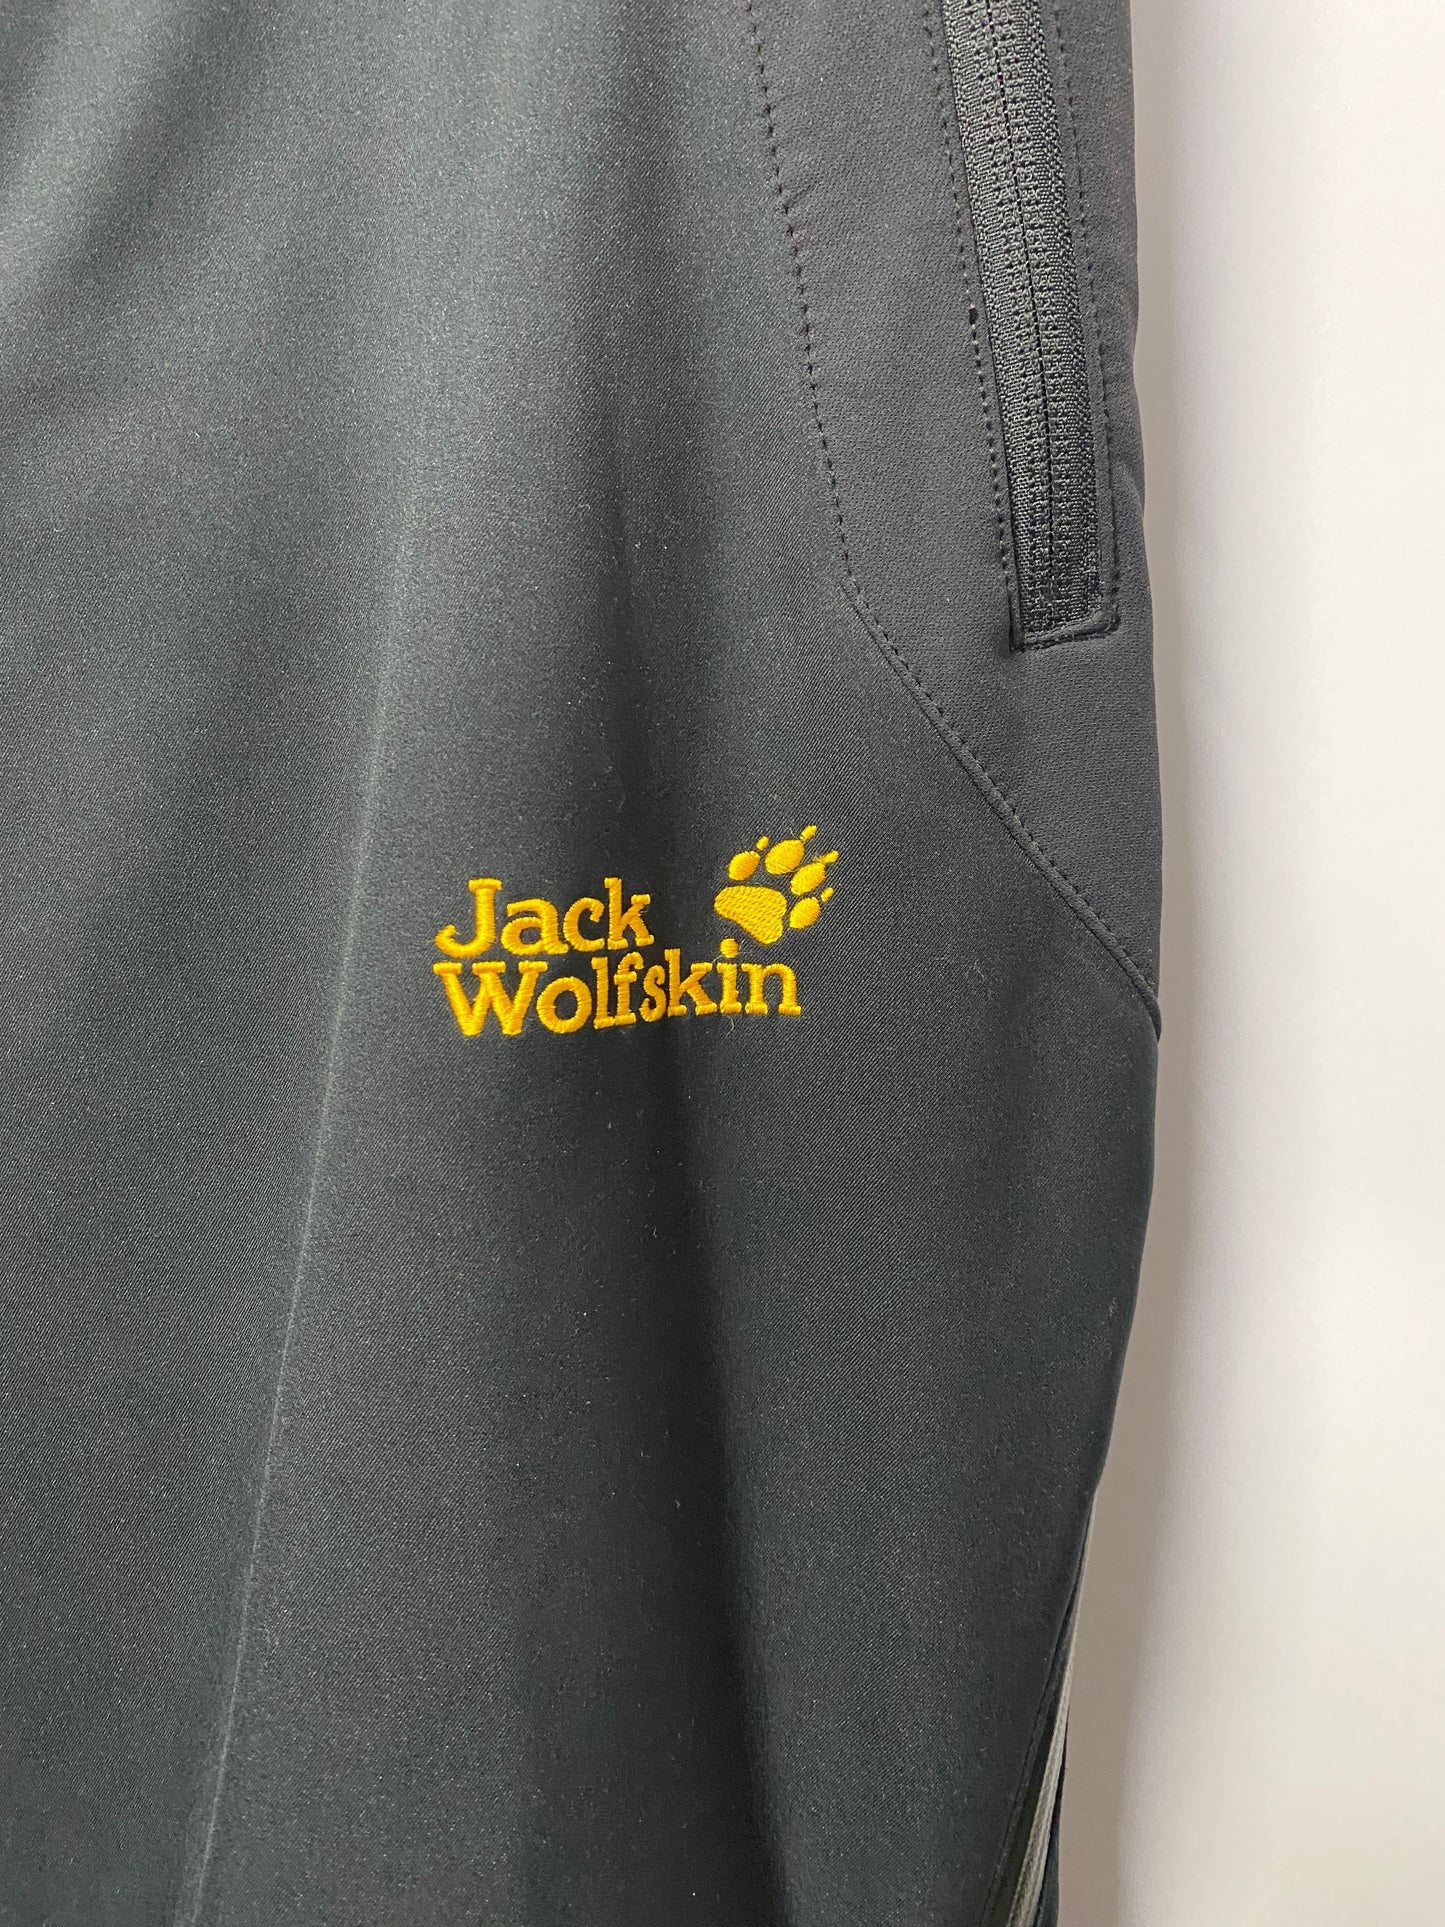 Jack Wolfskin Black Stormlock Softshell Salopettes XXL